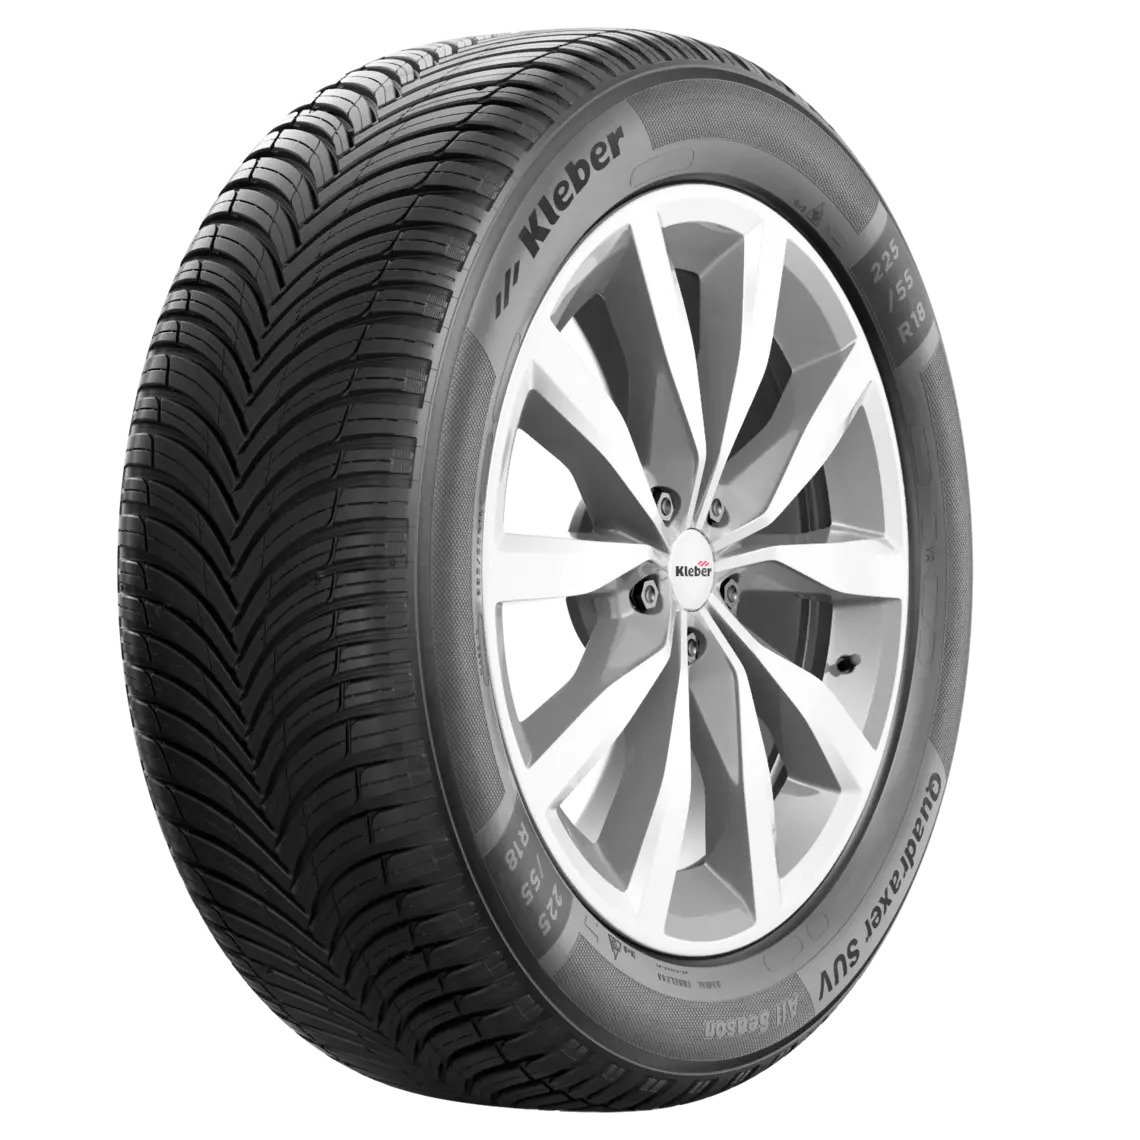 Kleber QUADRAXER 3 M+S 3PMSF XL FR 215/45 R17 91W celoročné osobné pneumatiky